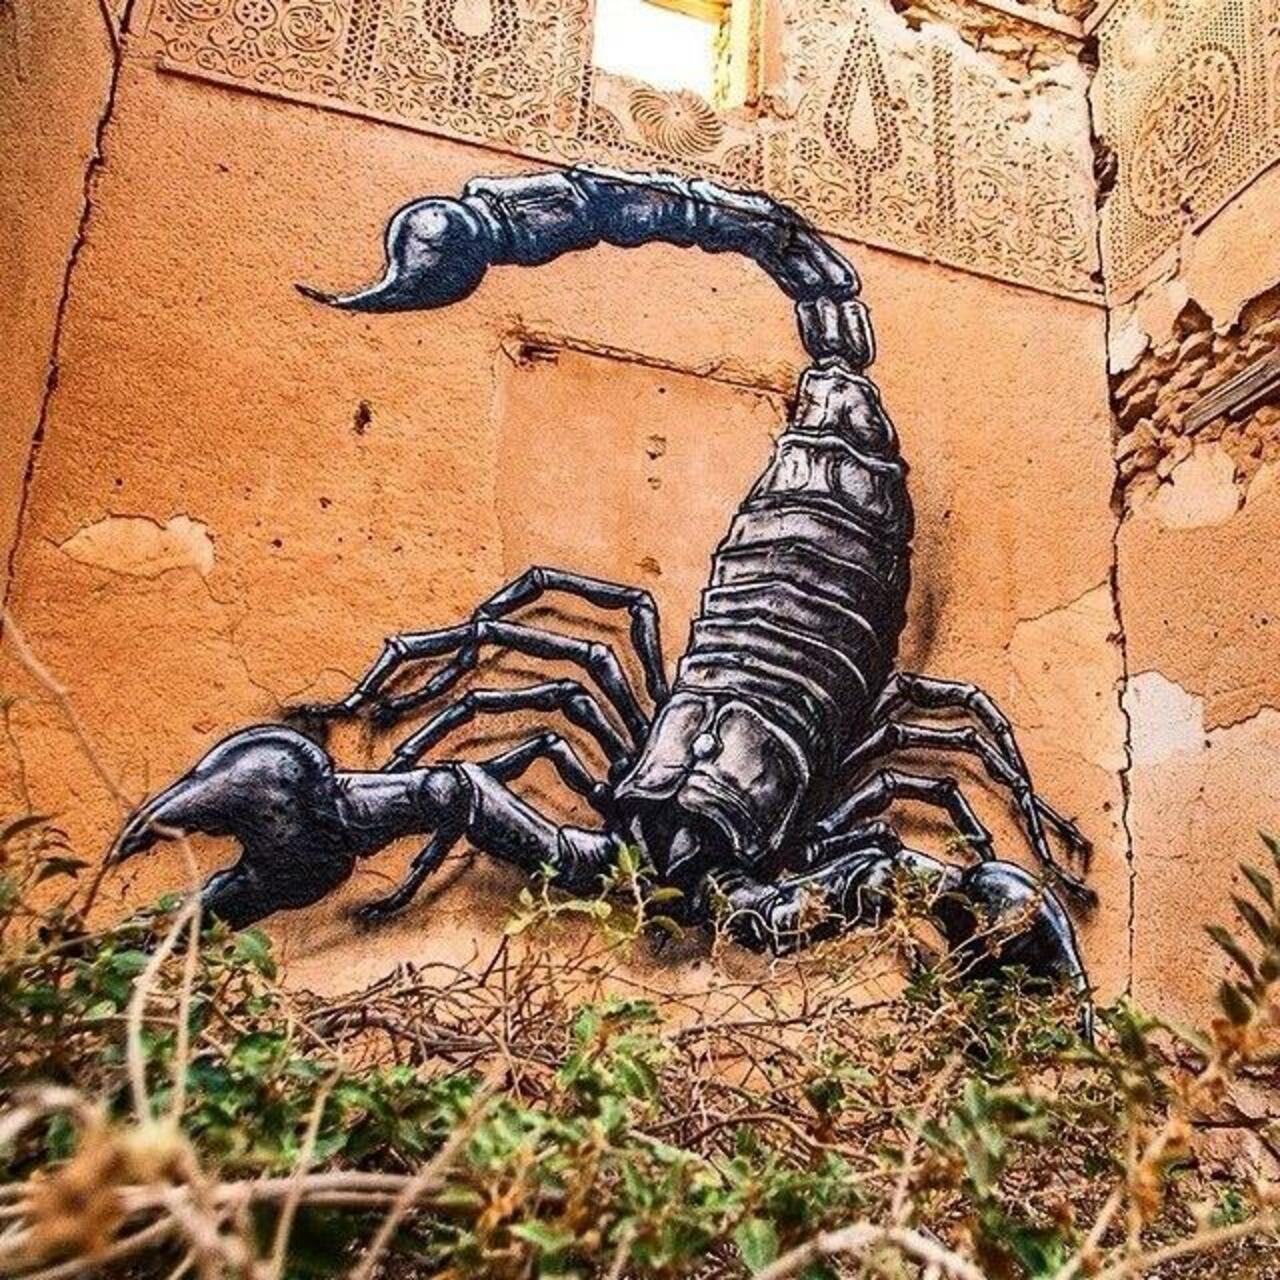 Artist ROA new Scorpion Street Art mural in Djerba, Tunisia #art #graffiti #nature #streetart http://t.co/Ktsa2ud4Ro